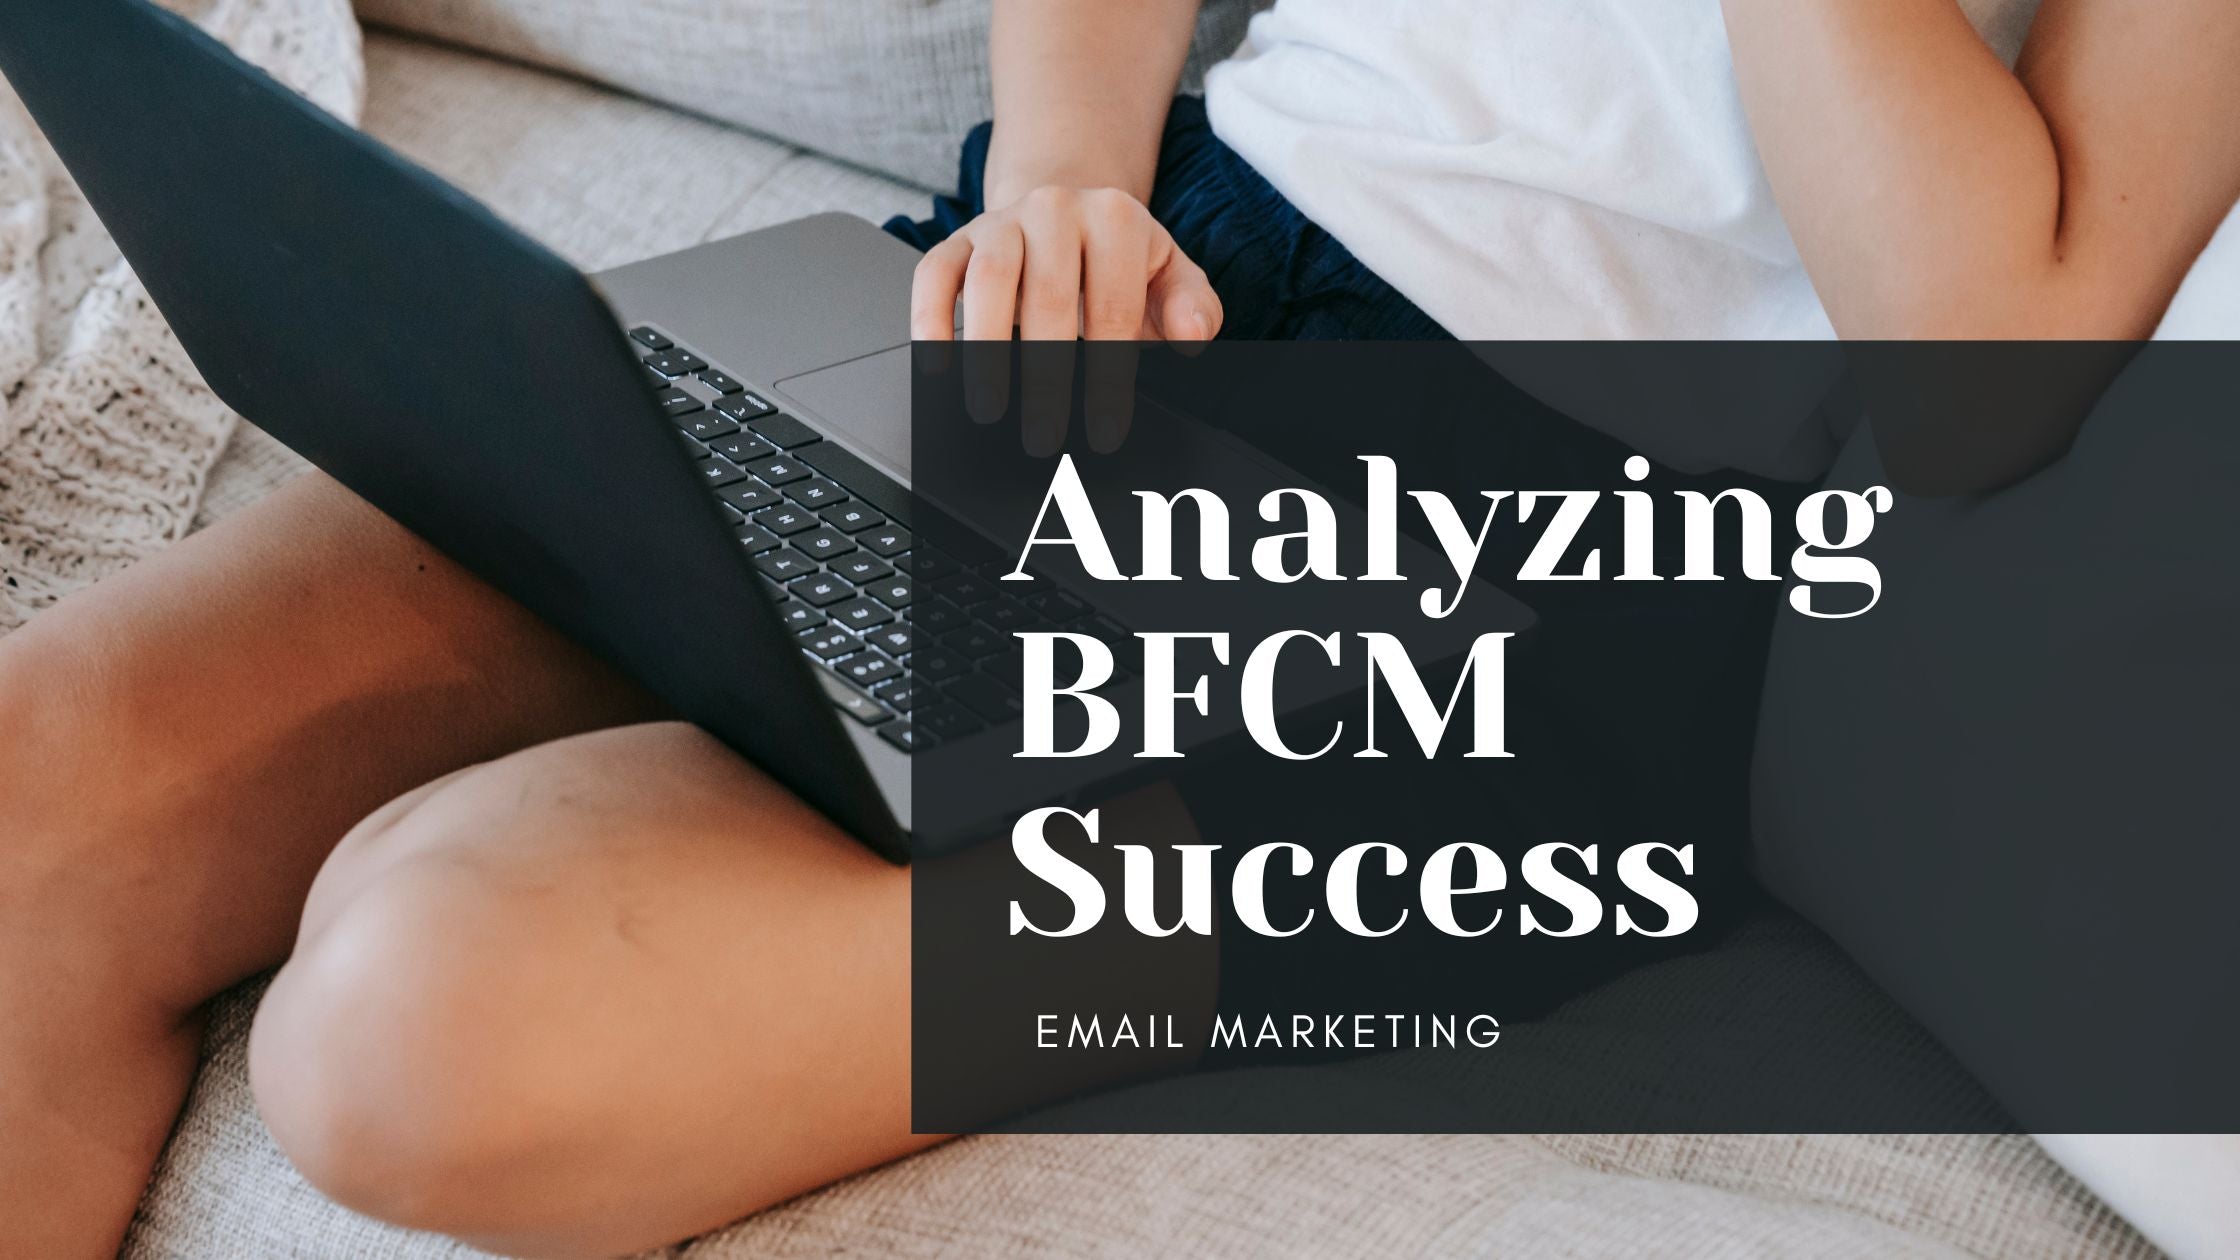 Analyzing BFCM email marketing success